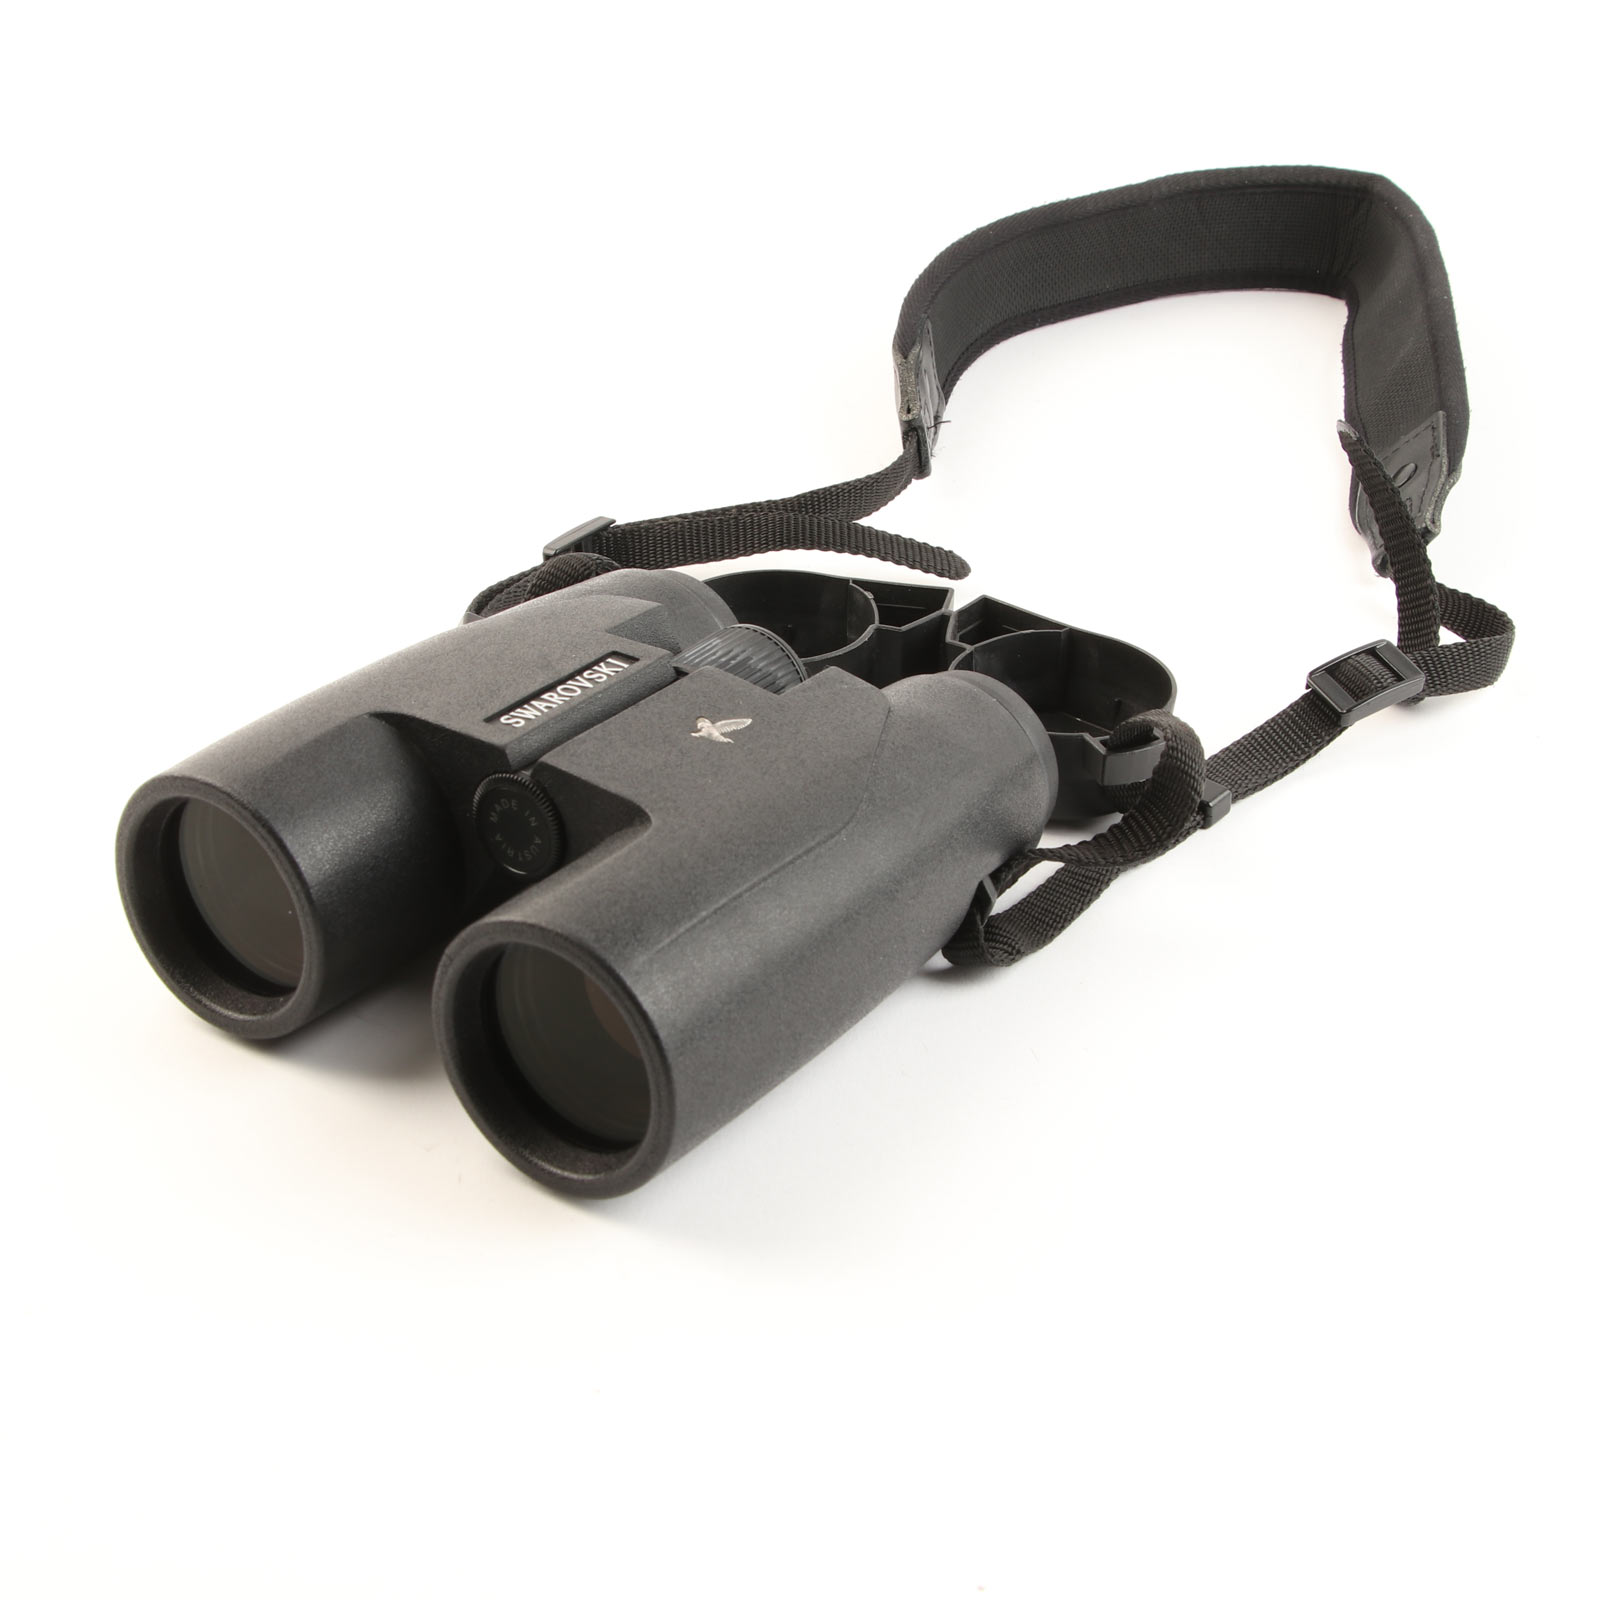 USED Swarovski SLC 10x42WB Binoculars